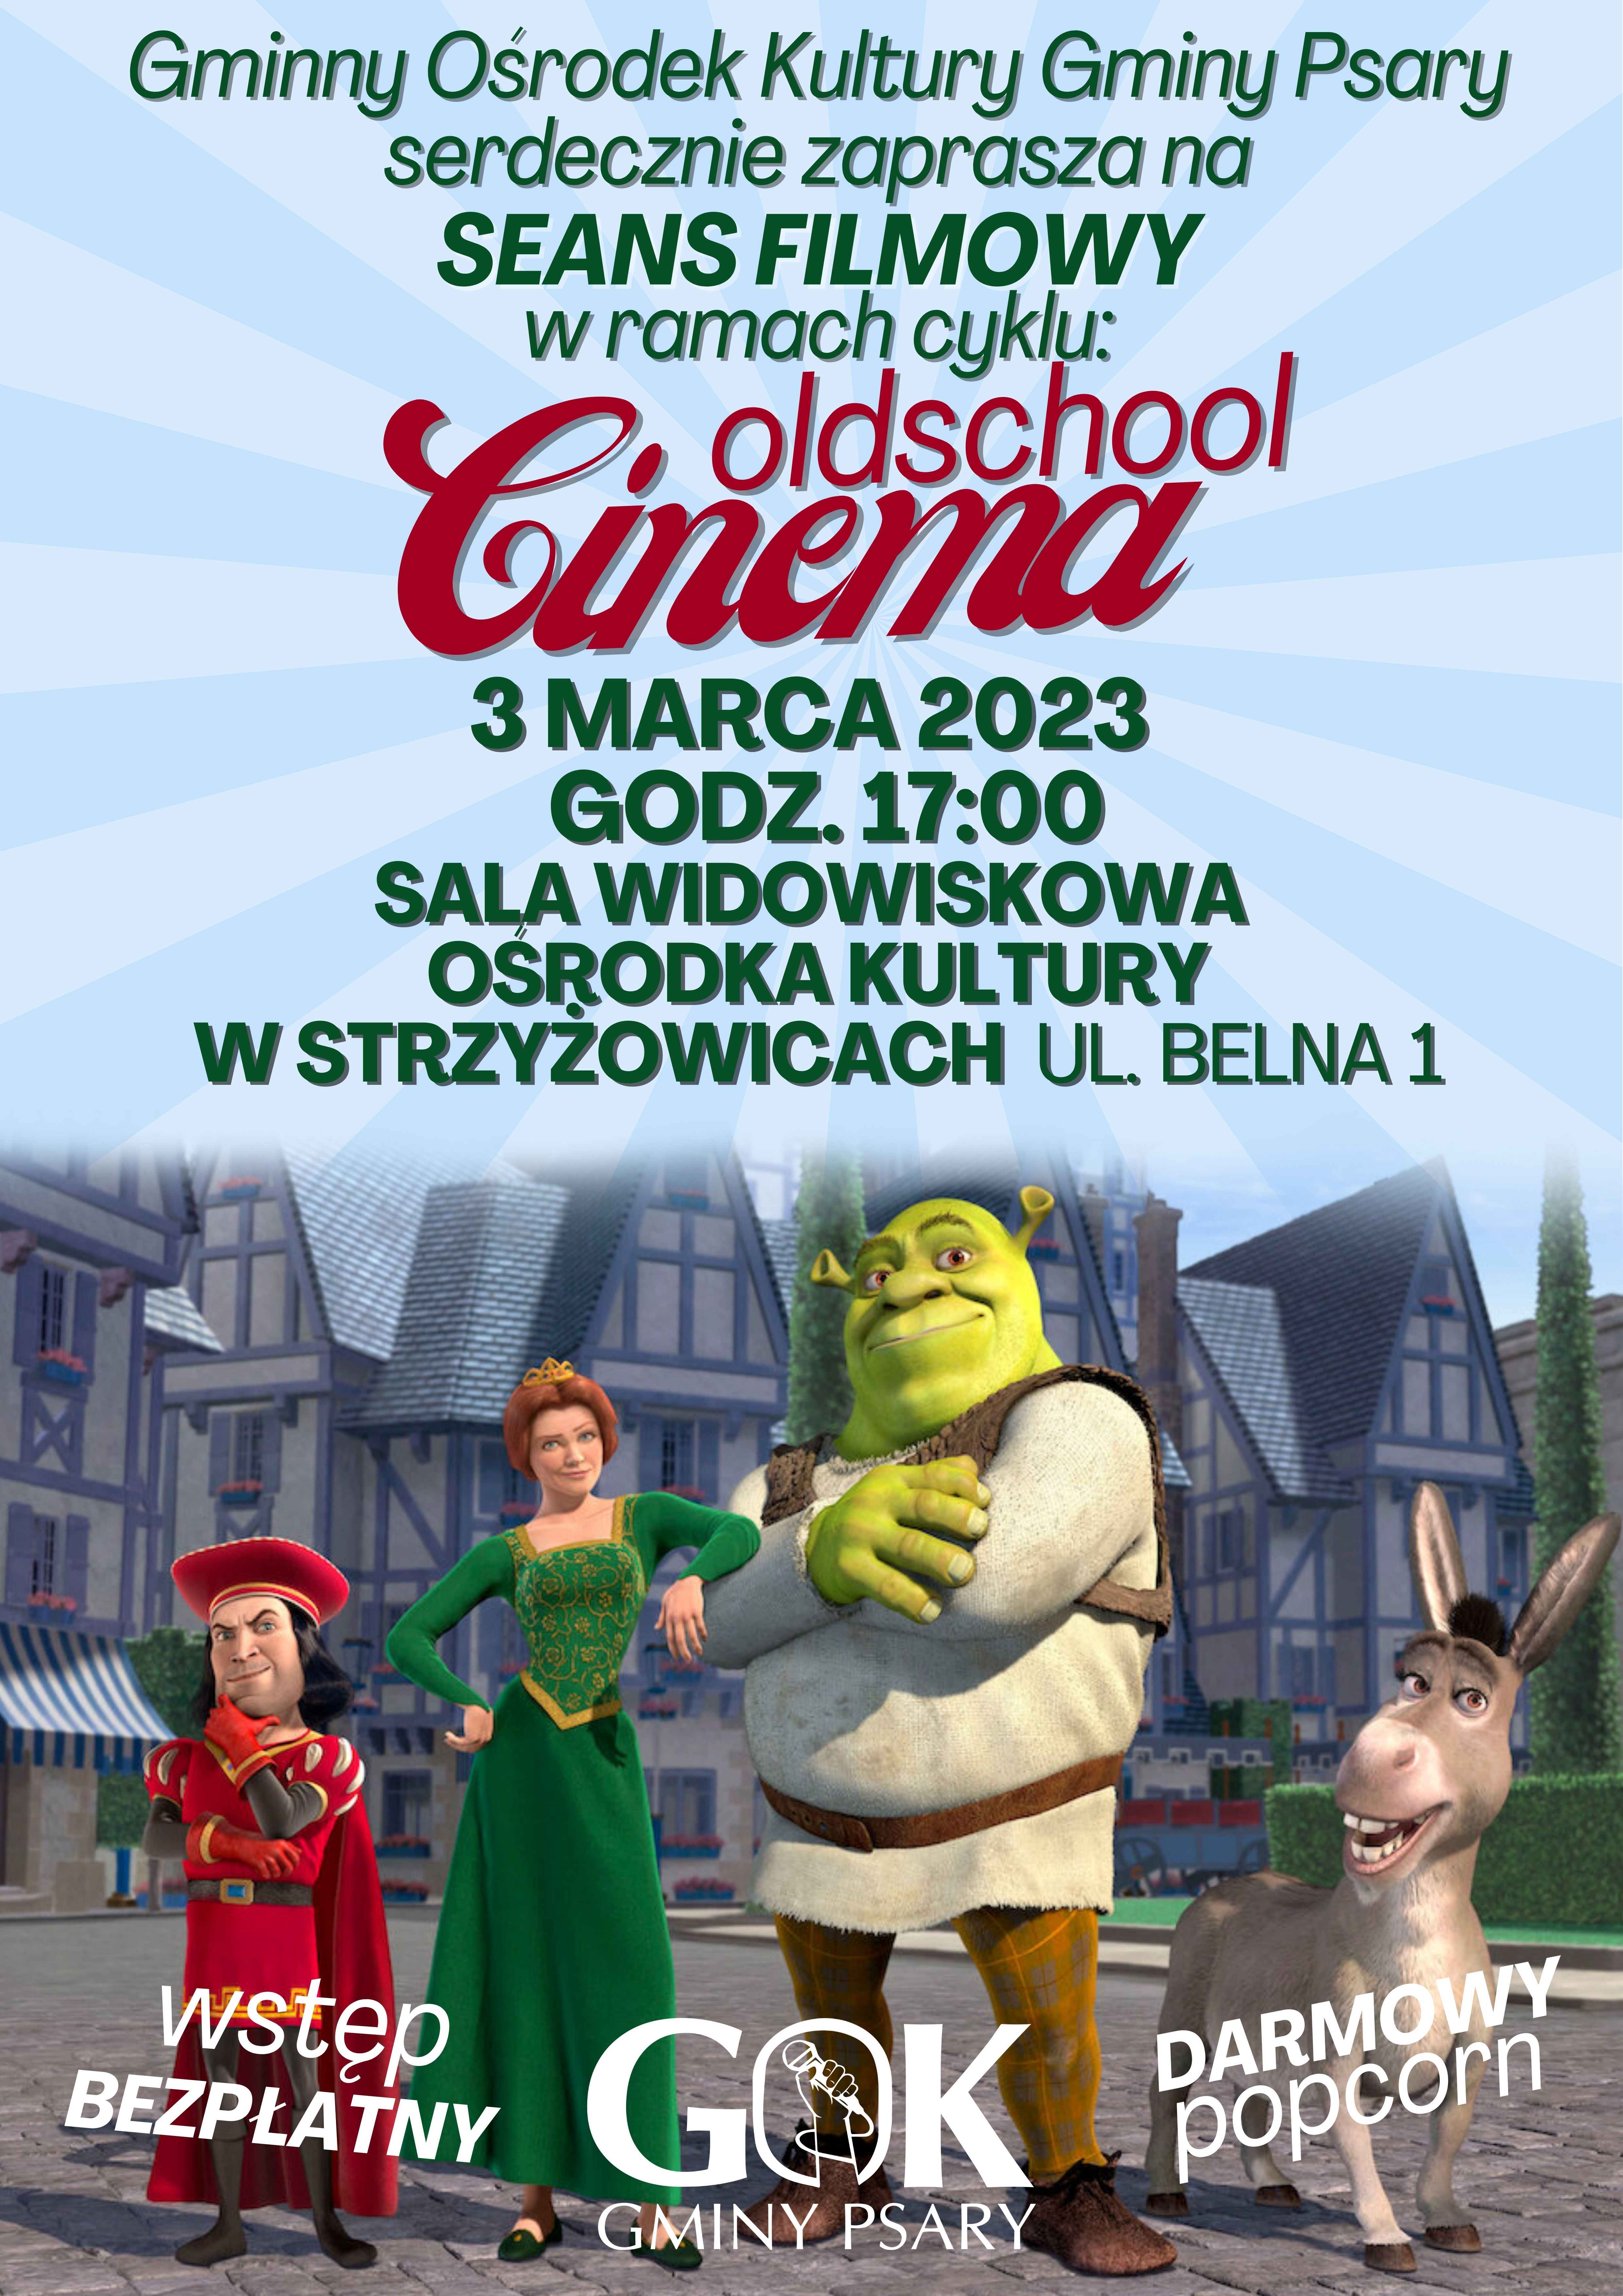 Kino Shrek 2